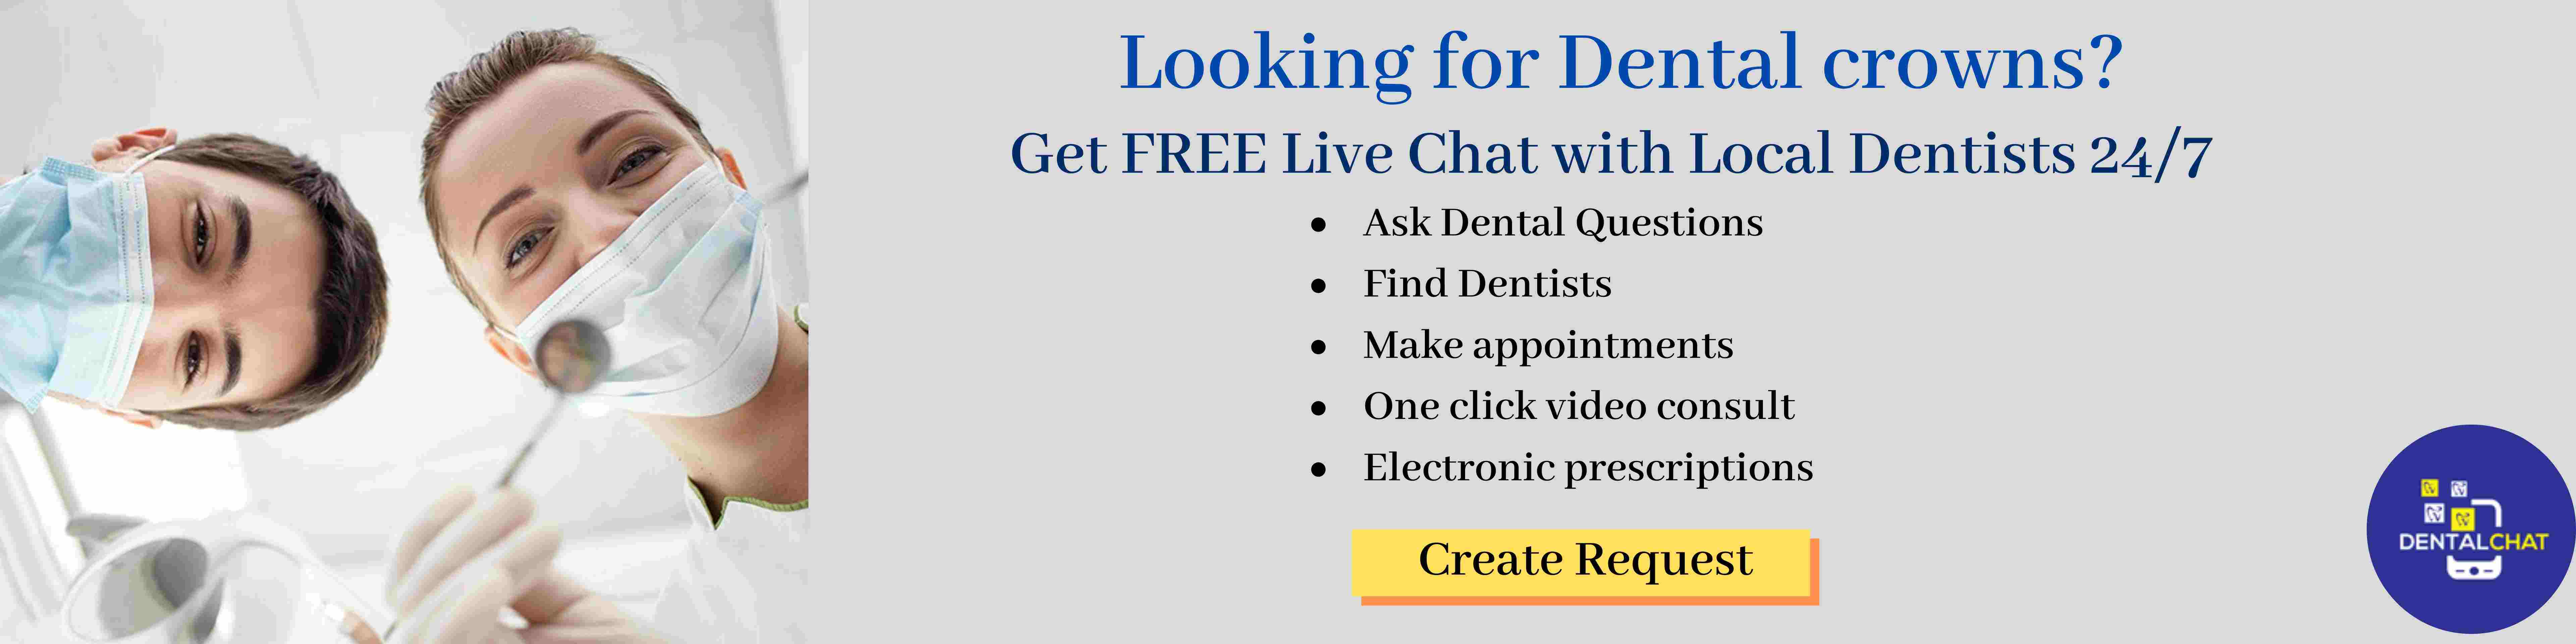 Just Dental about Cosmetic Dentistry Treatment, Dental Crowns Blogging Online, and Dental Veneers Blog